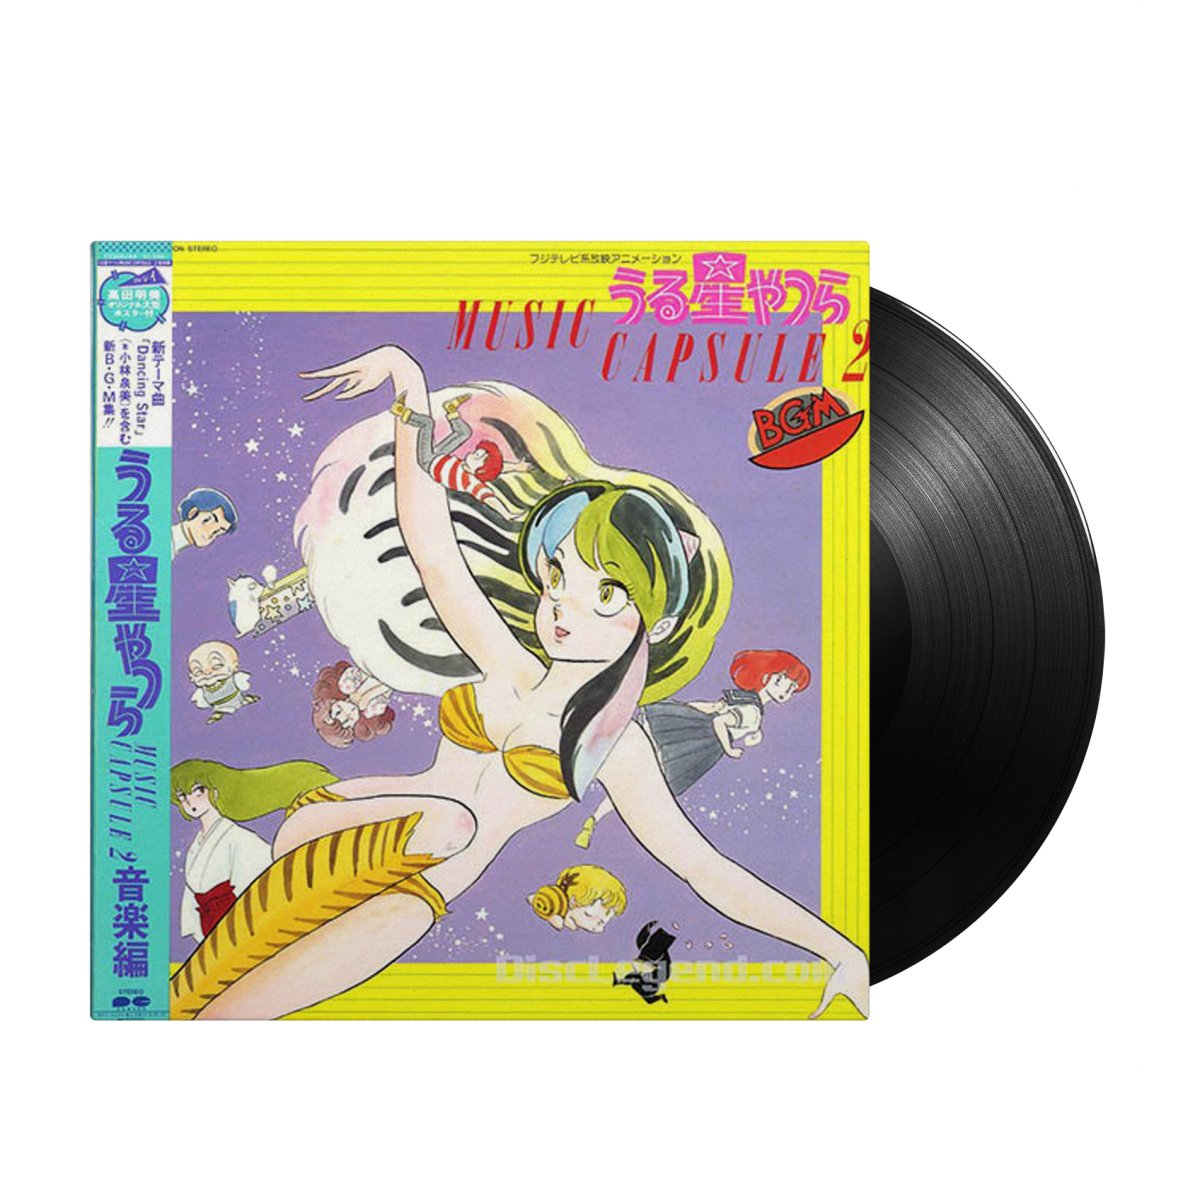 V/A - Urusei Yatsura Music Capsule 2 (Japan Import) - Inner Ocean Records